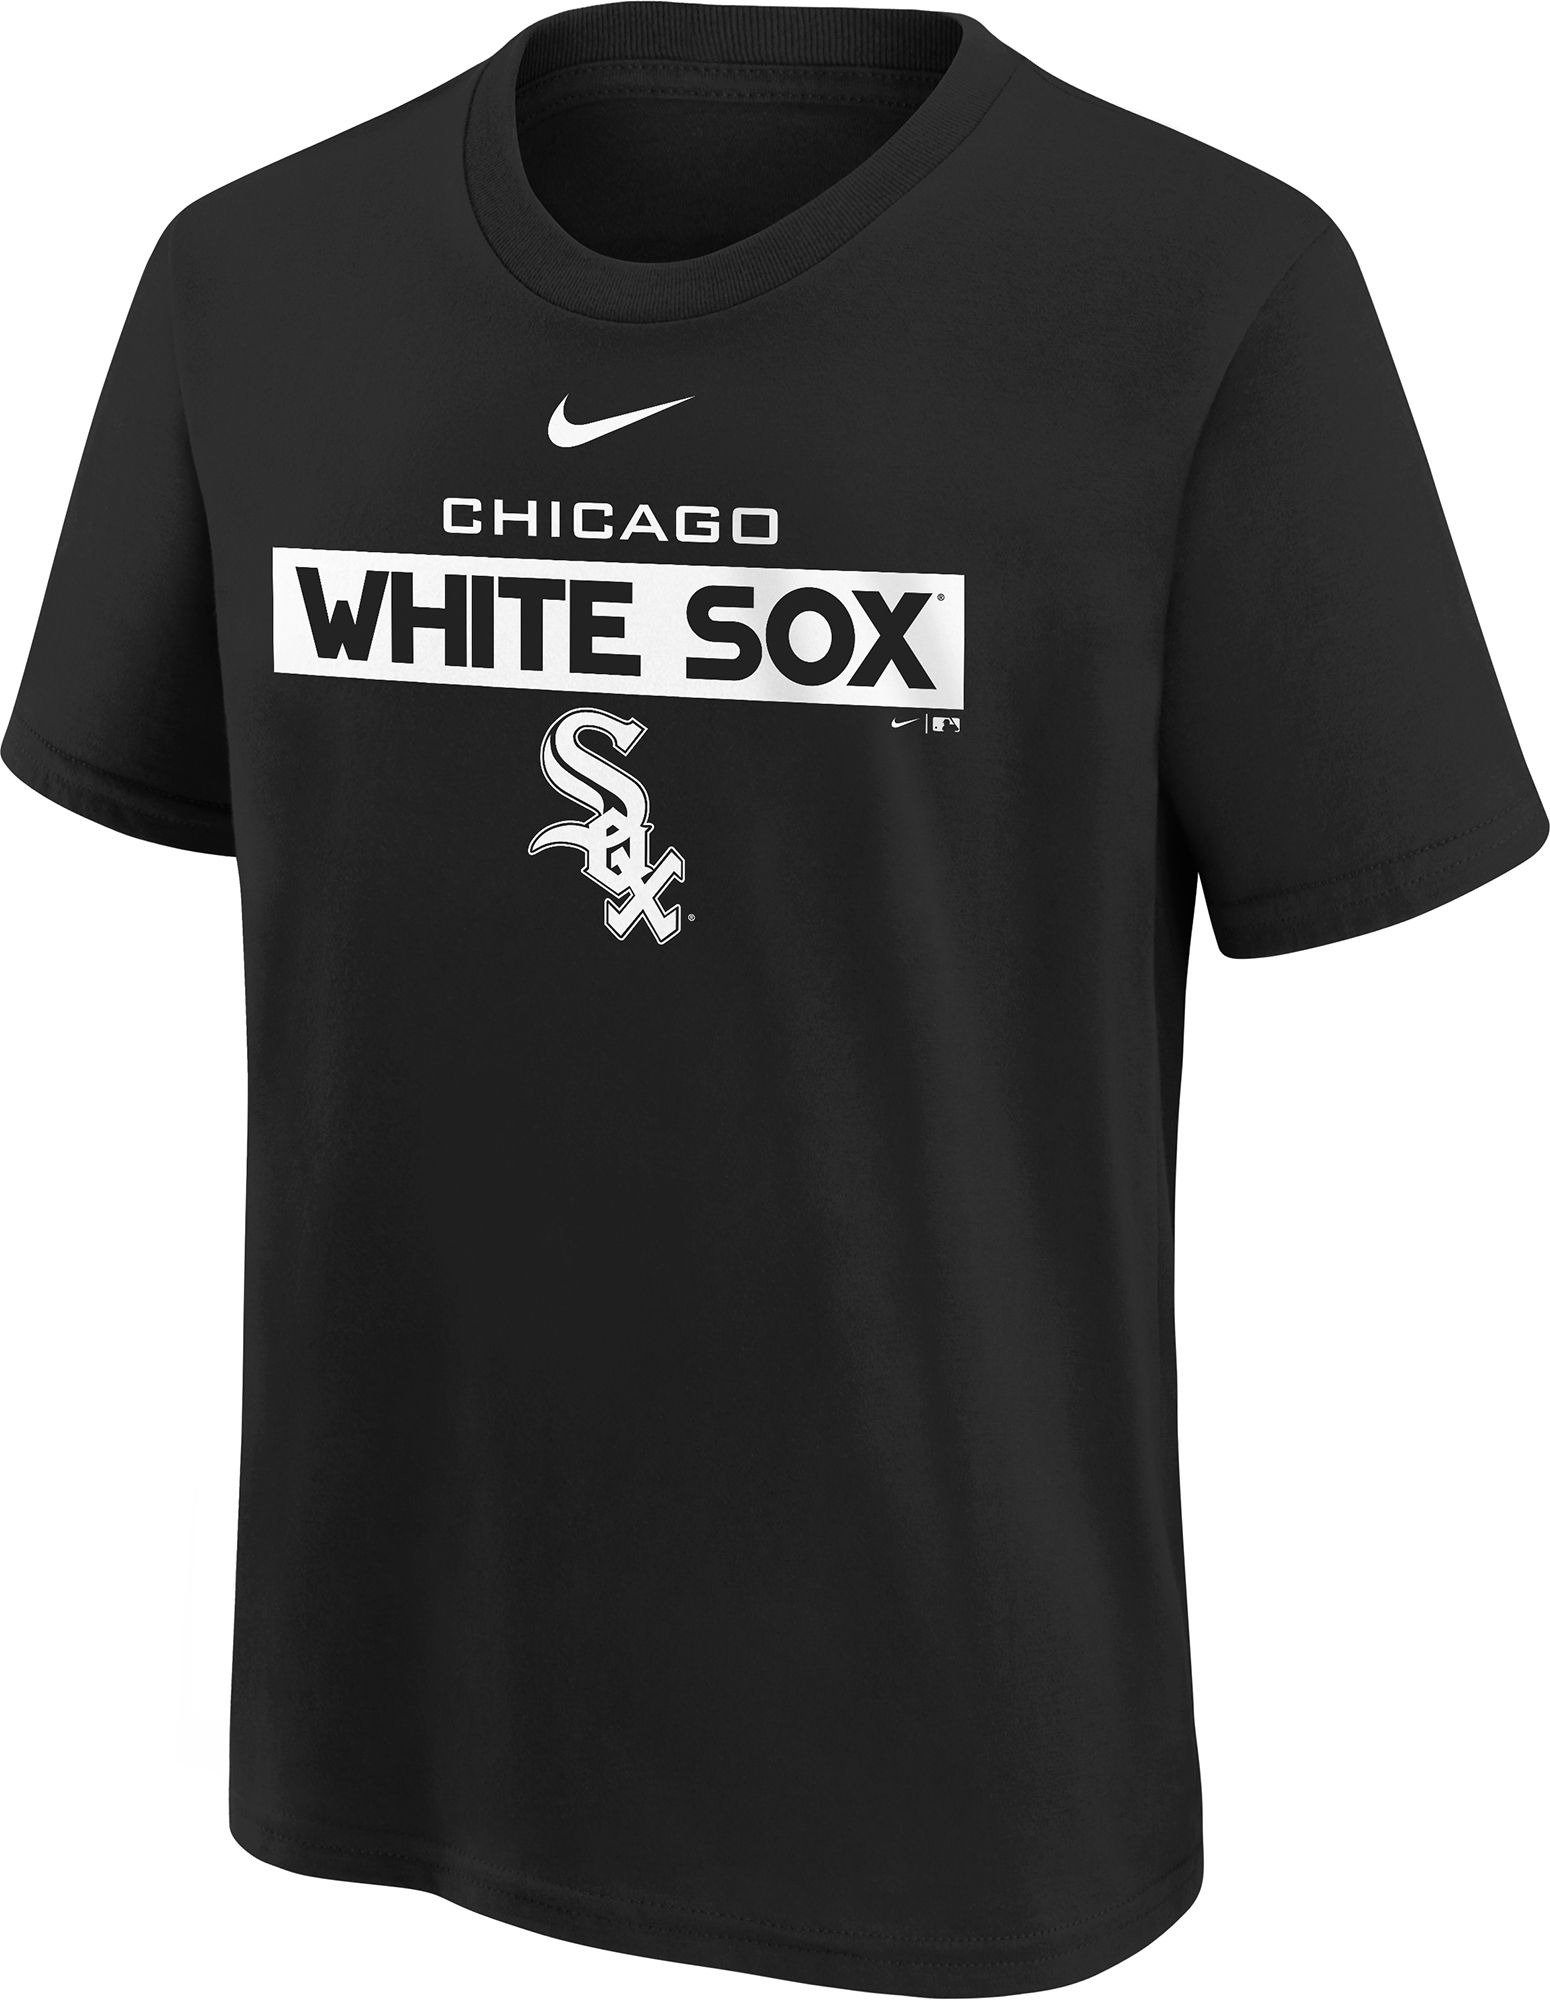 Nike / Youth Boys' Chicago White Sox Black Issue T-Shirt